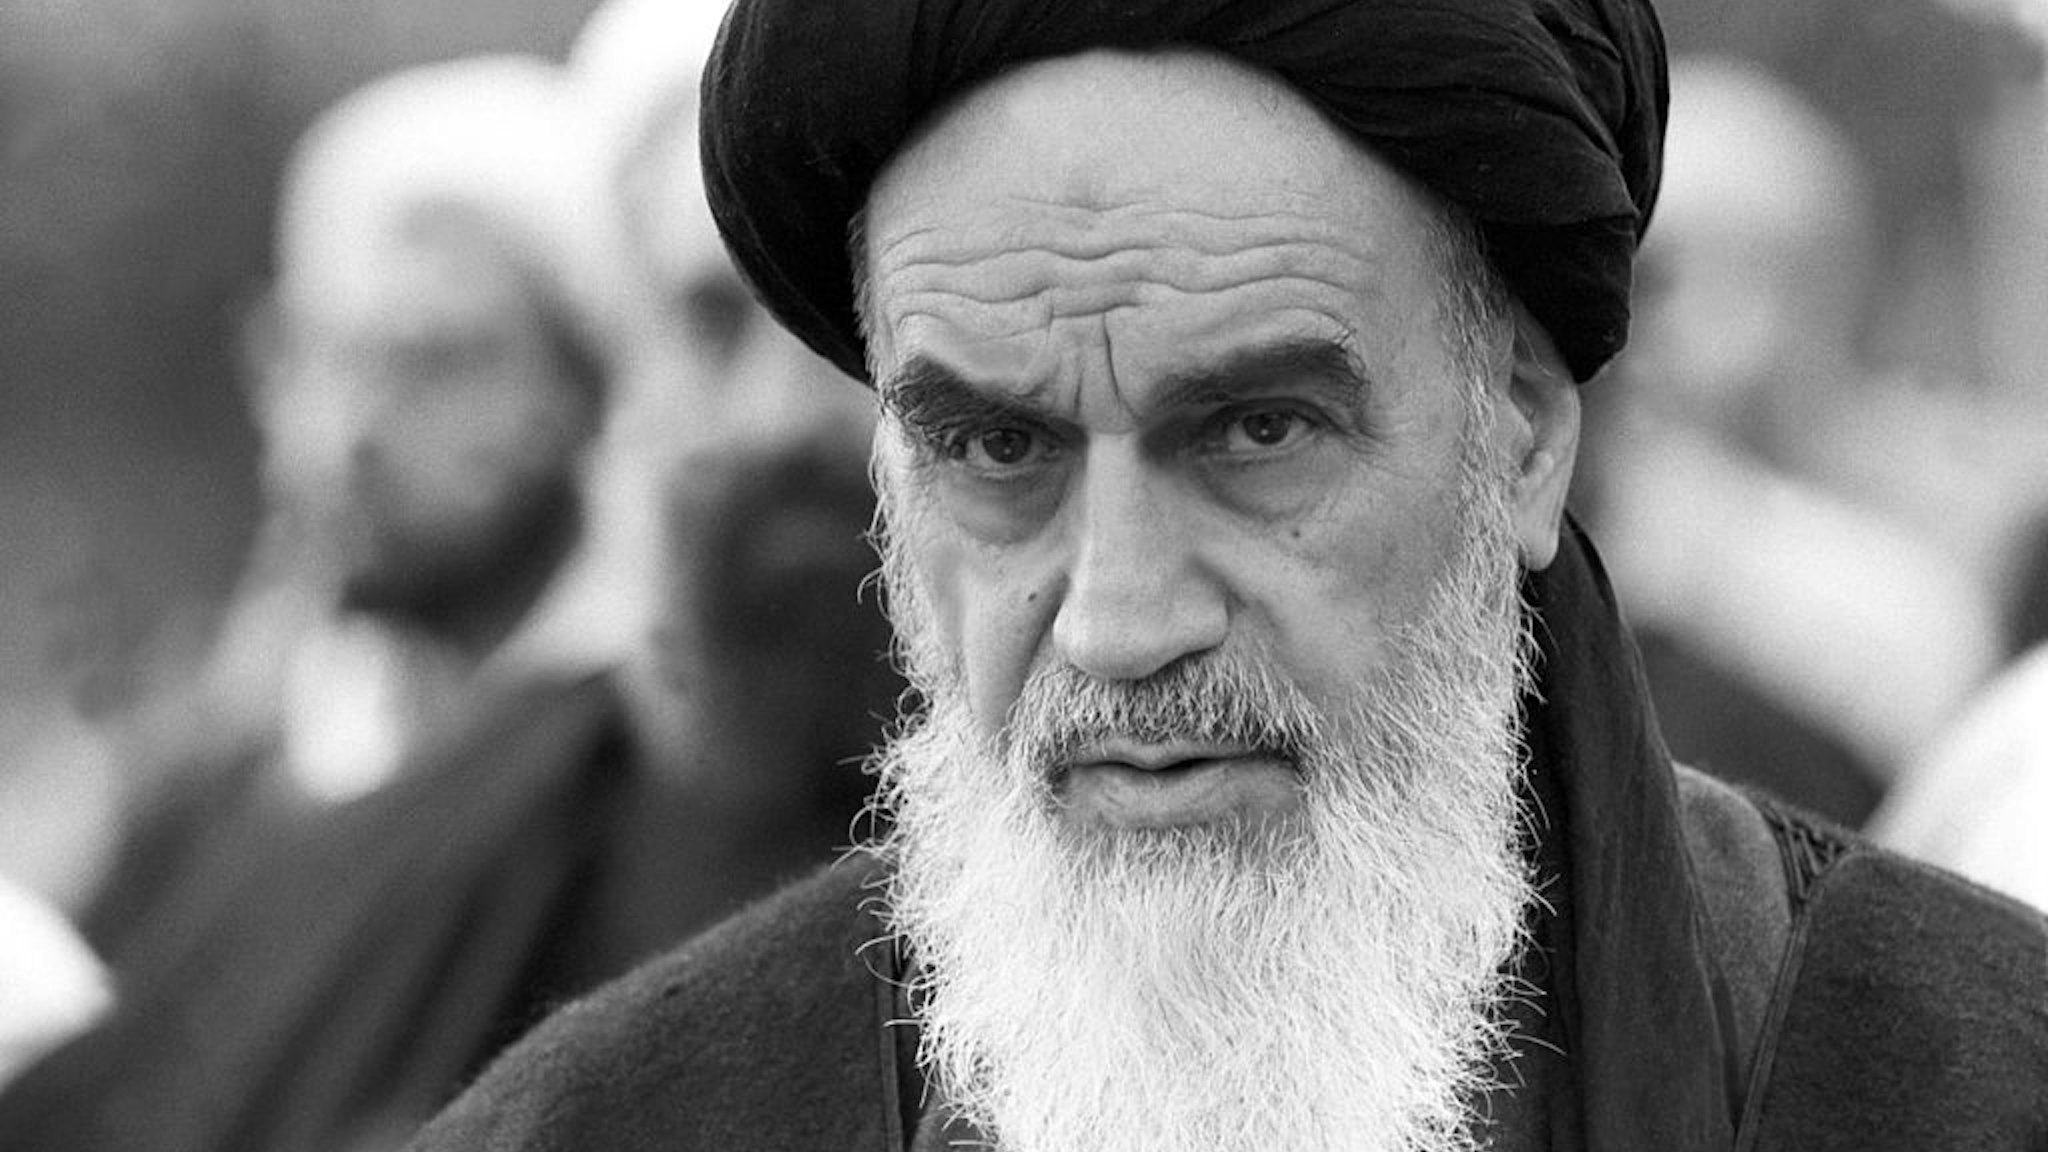 Ayatollah Khomeini praying in Neauphle -le -Chateau, France on November 20, 1978.